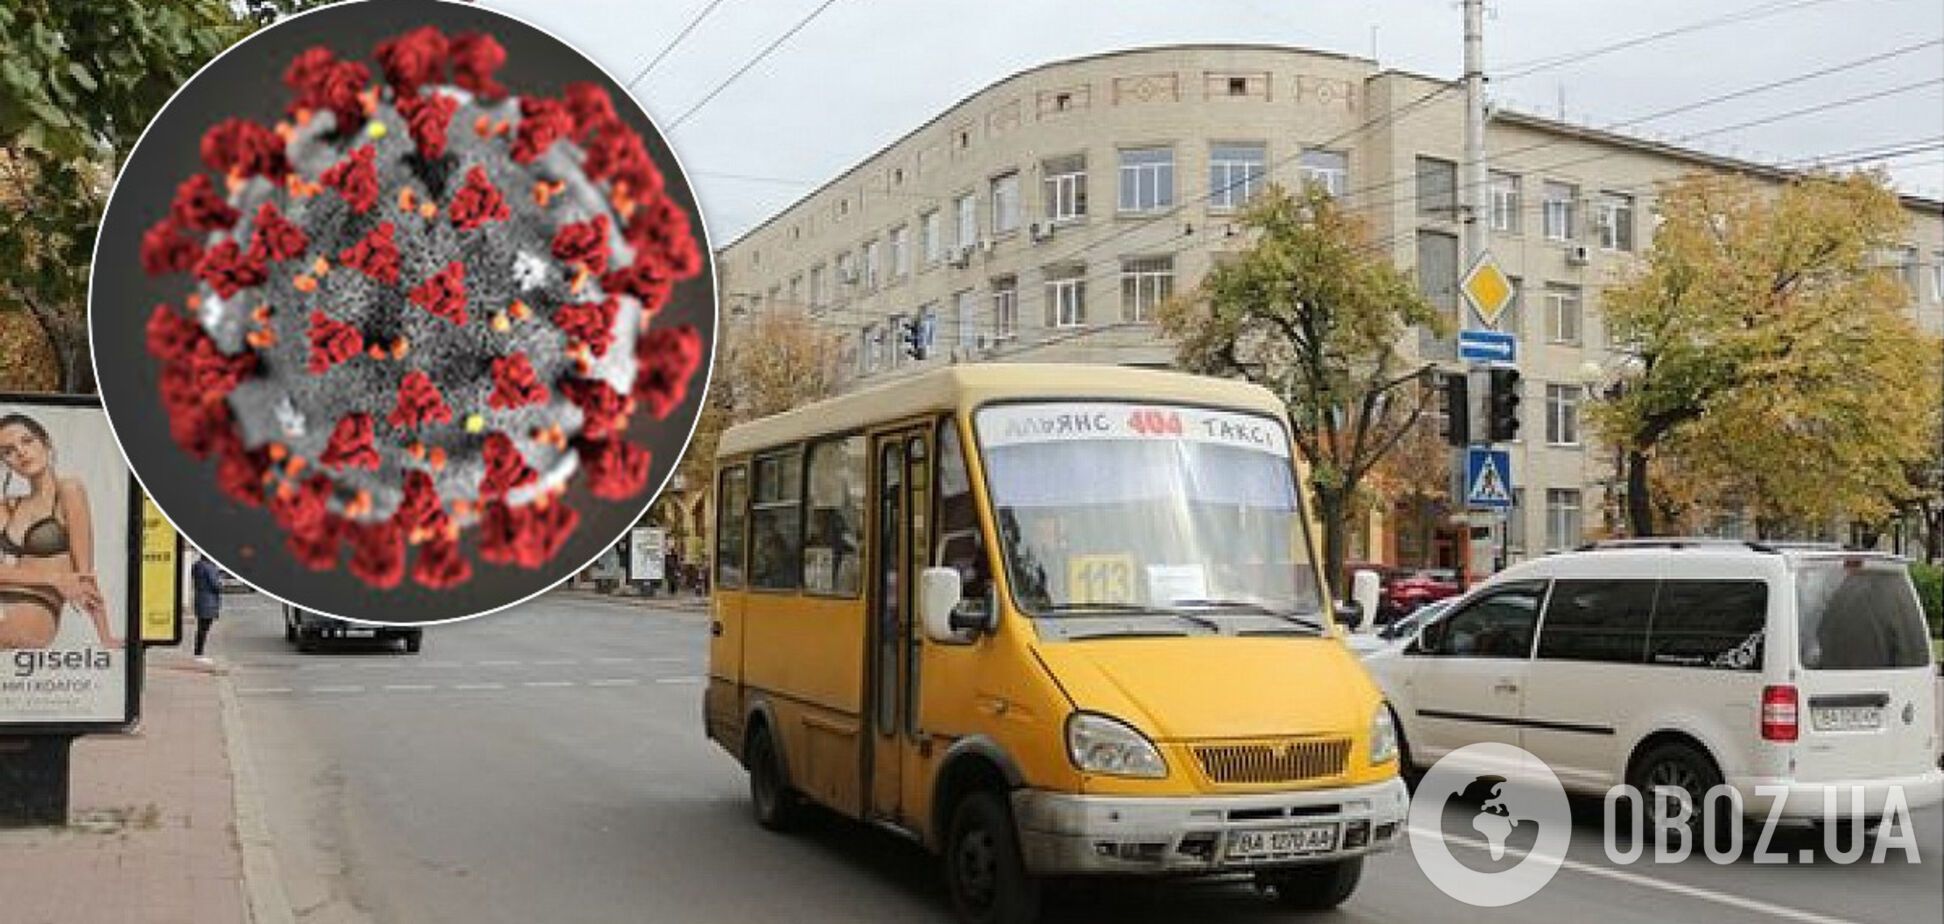 У Кропивницькому в маршрутника знайшли коронавірус: рух транспорту припинено